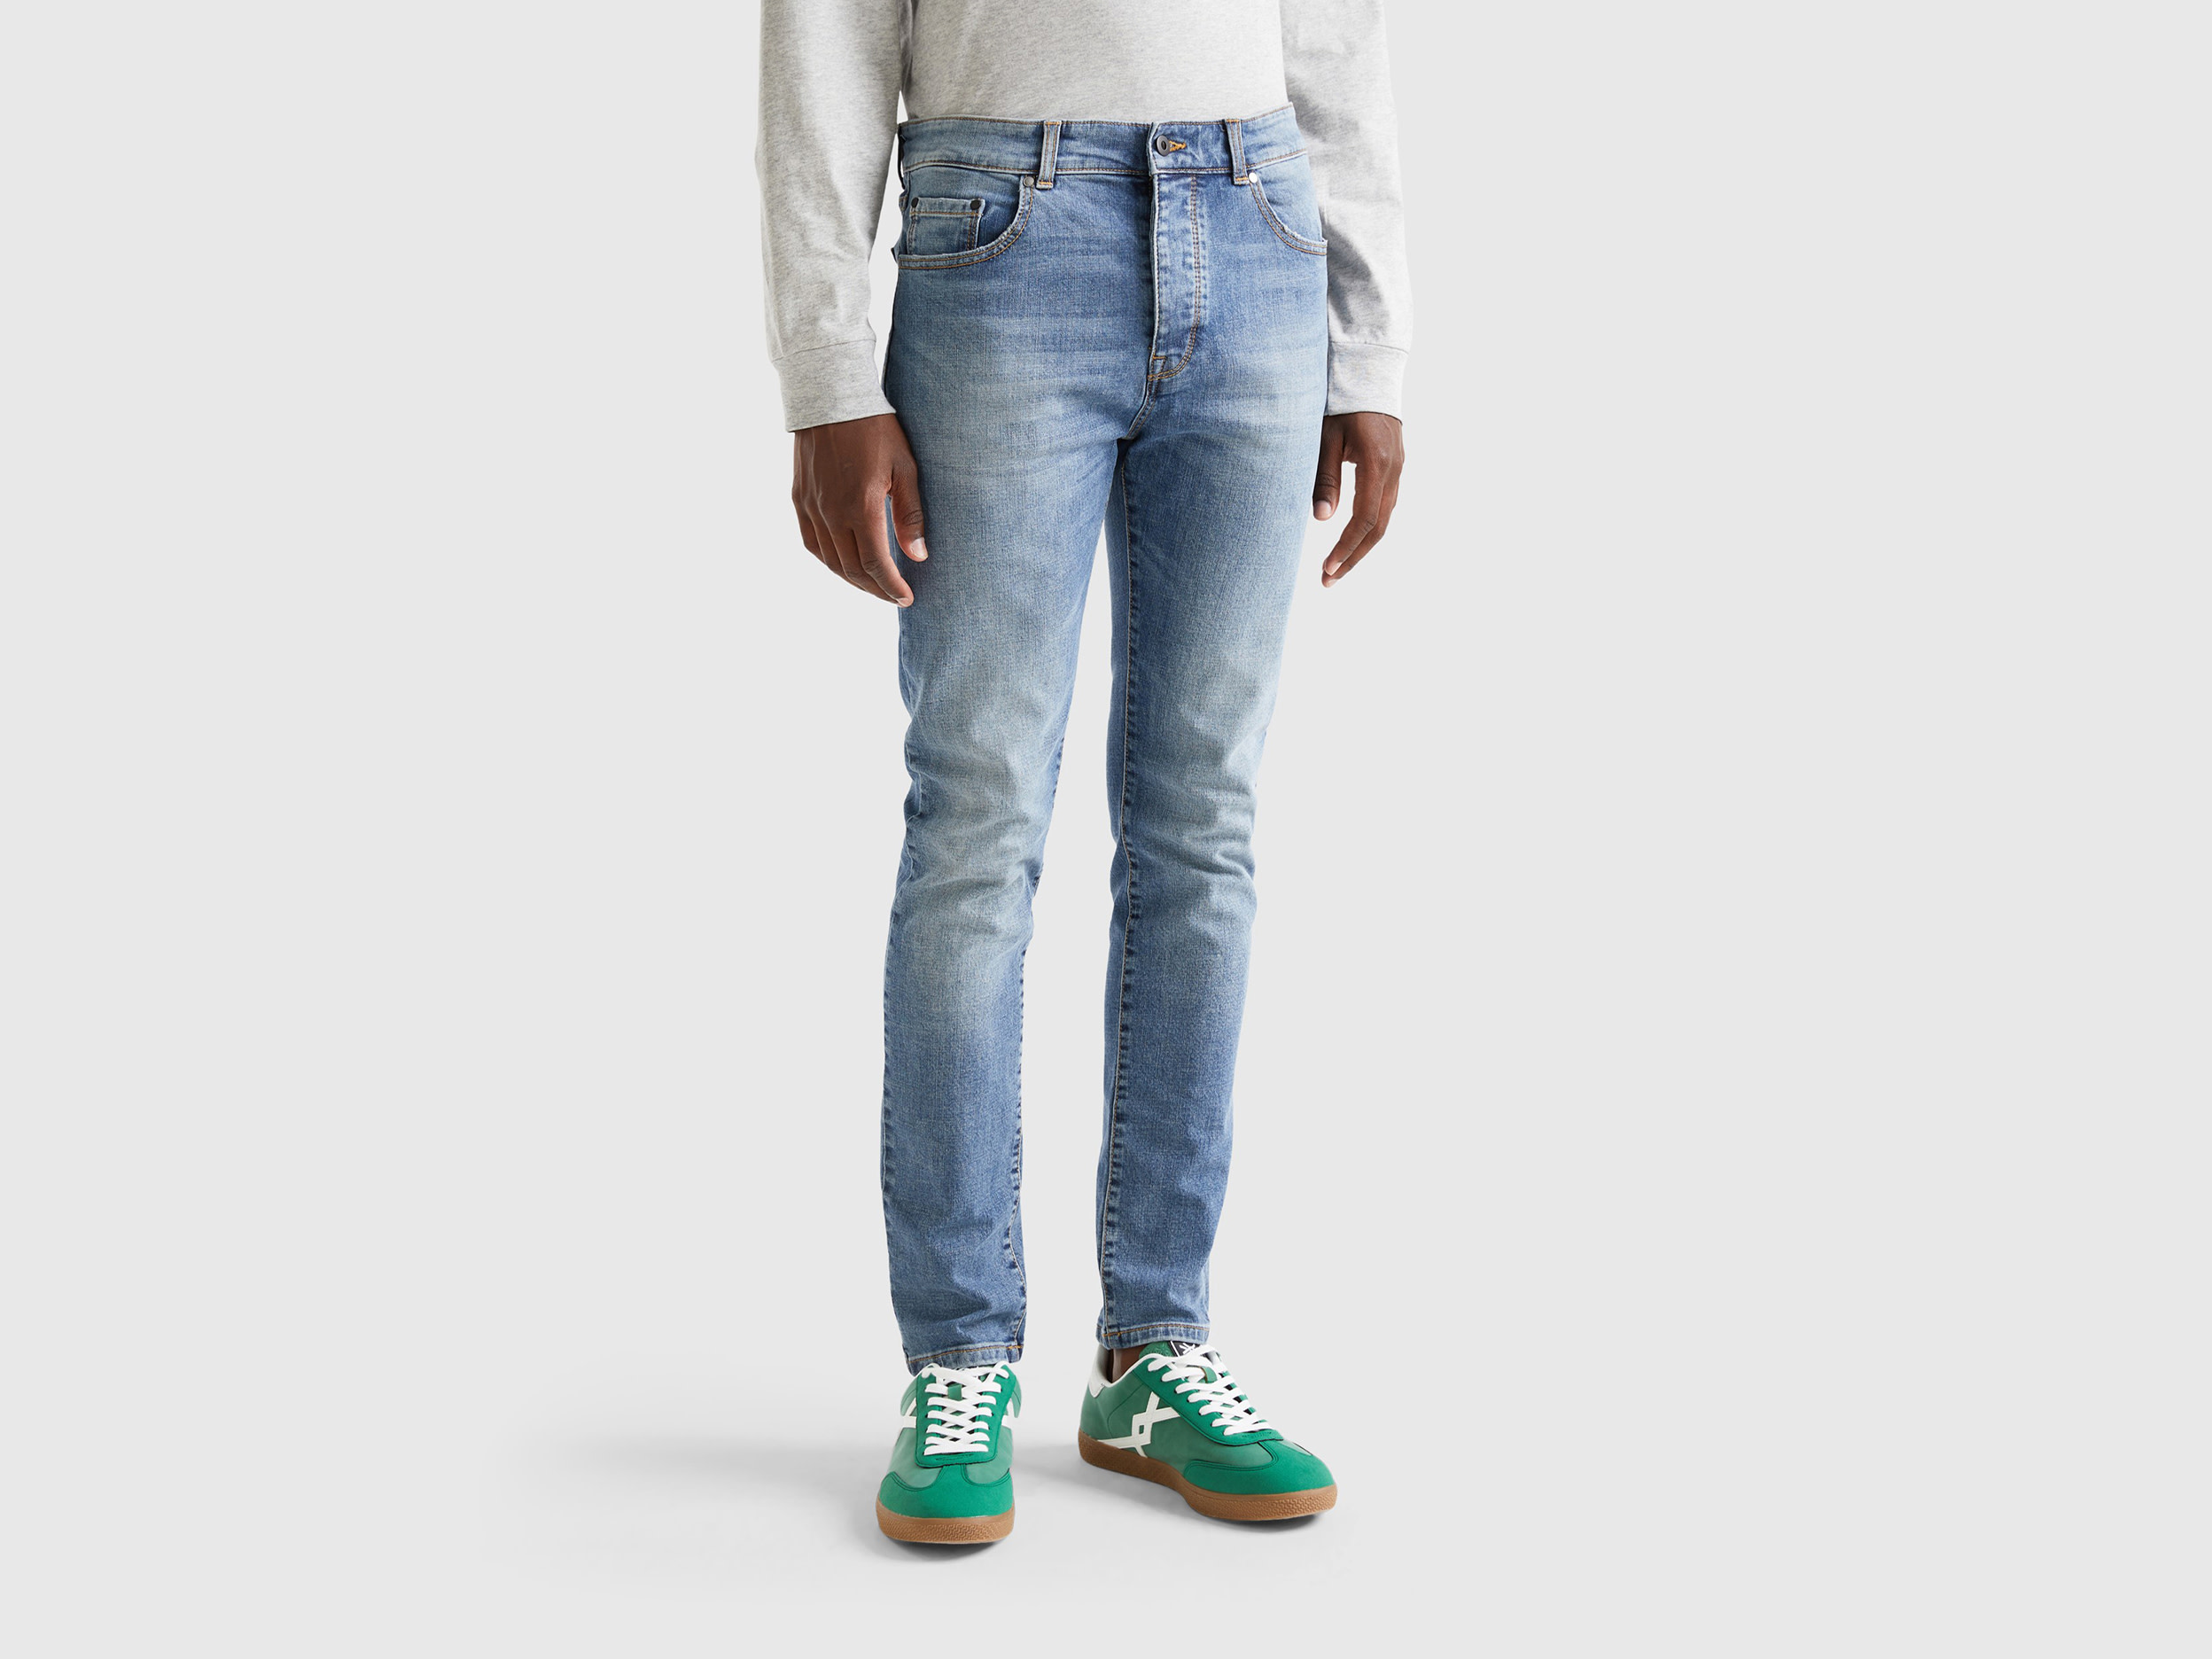 Benetton, Skinny Fit Jeans, size 35, Light Blue, Men